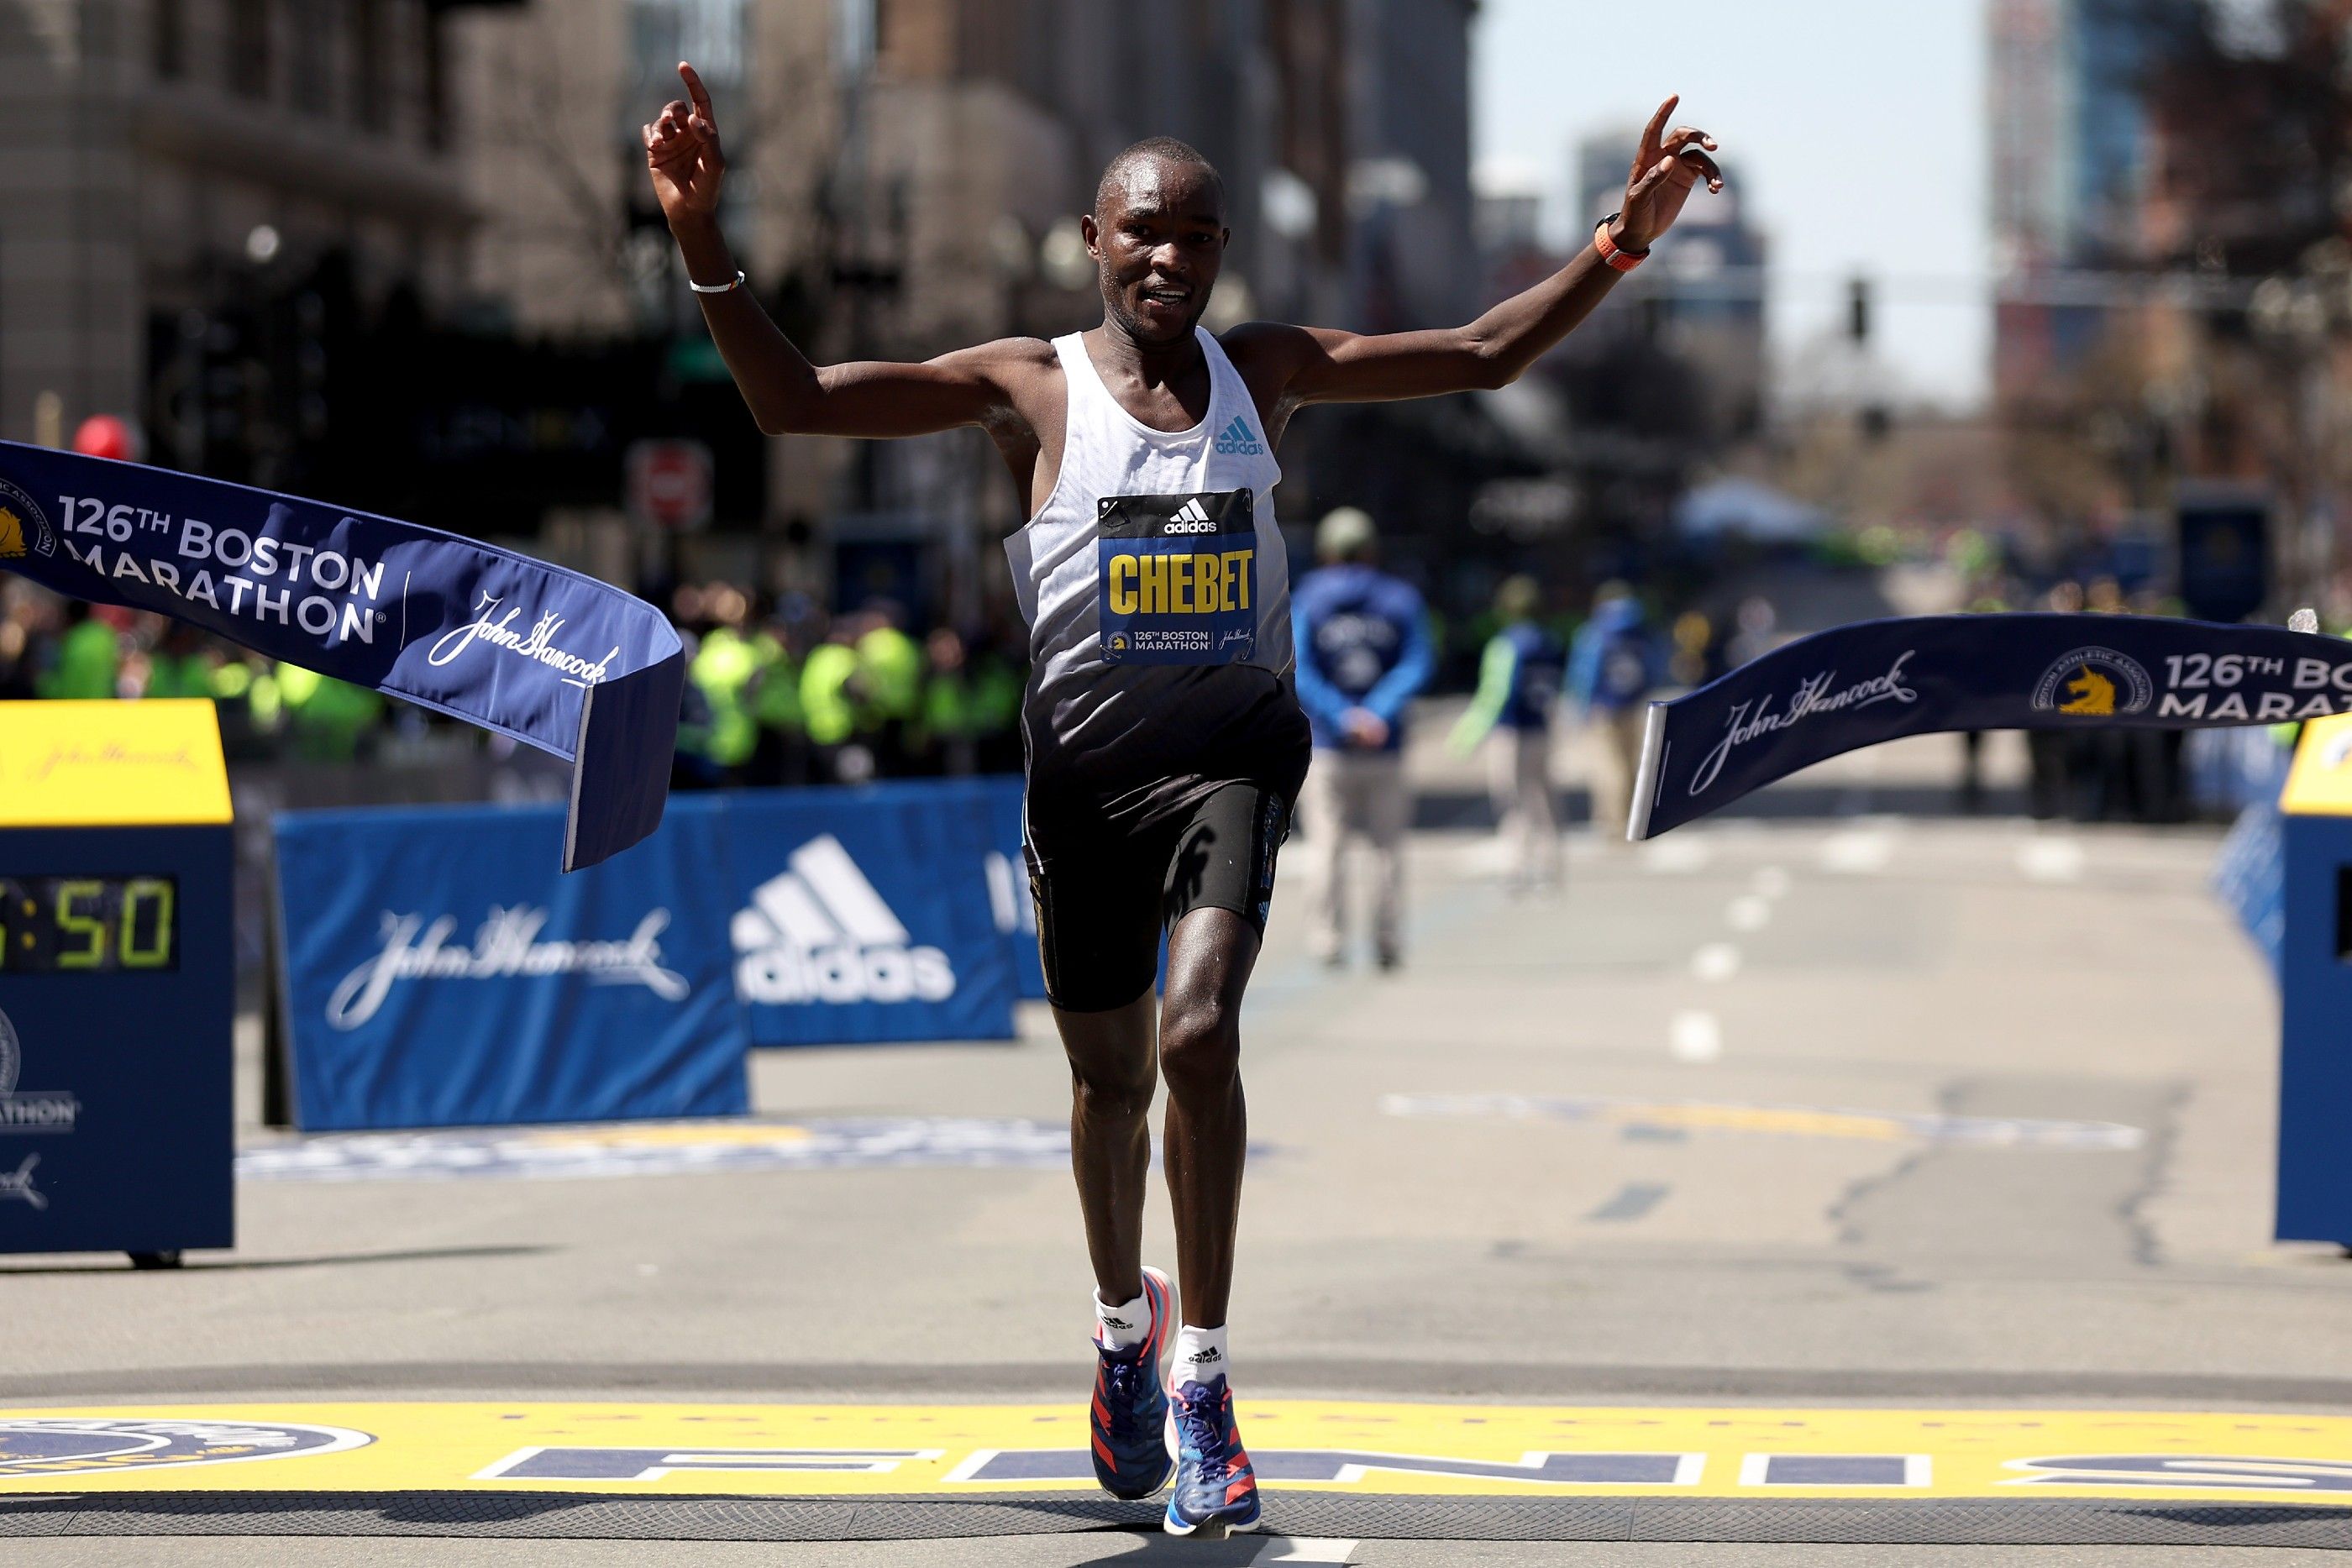 Evans Chebet wins the 126th BAA Boston Marathon